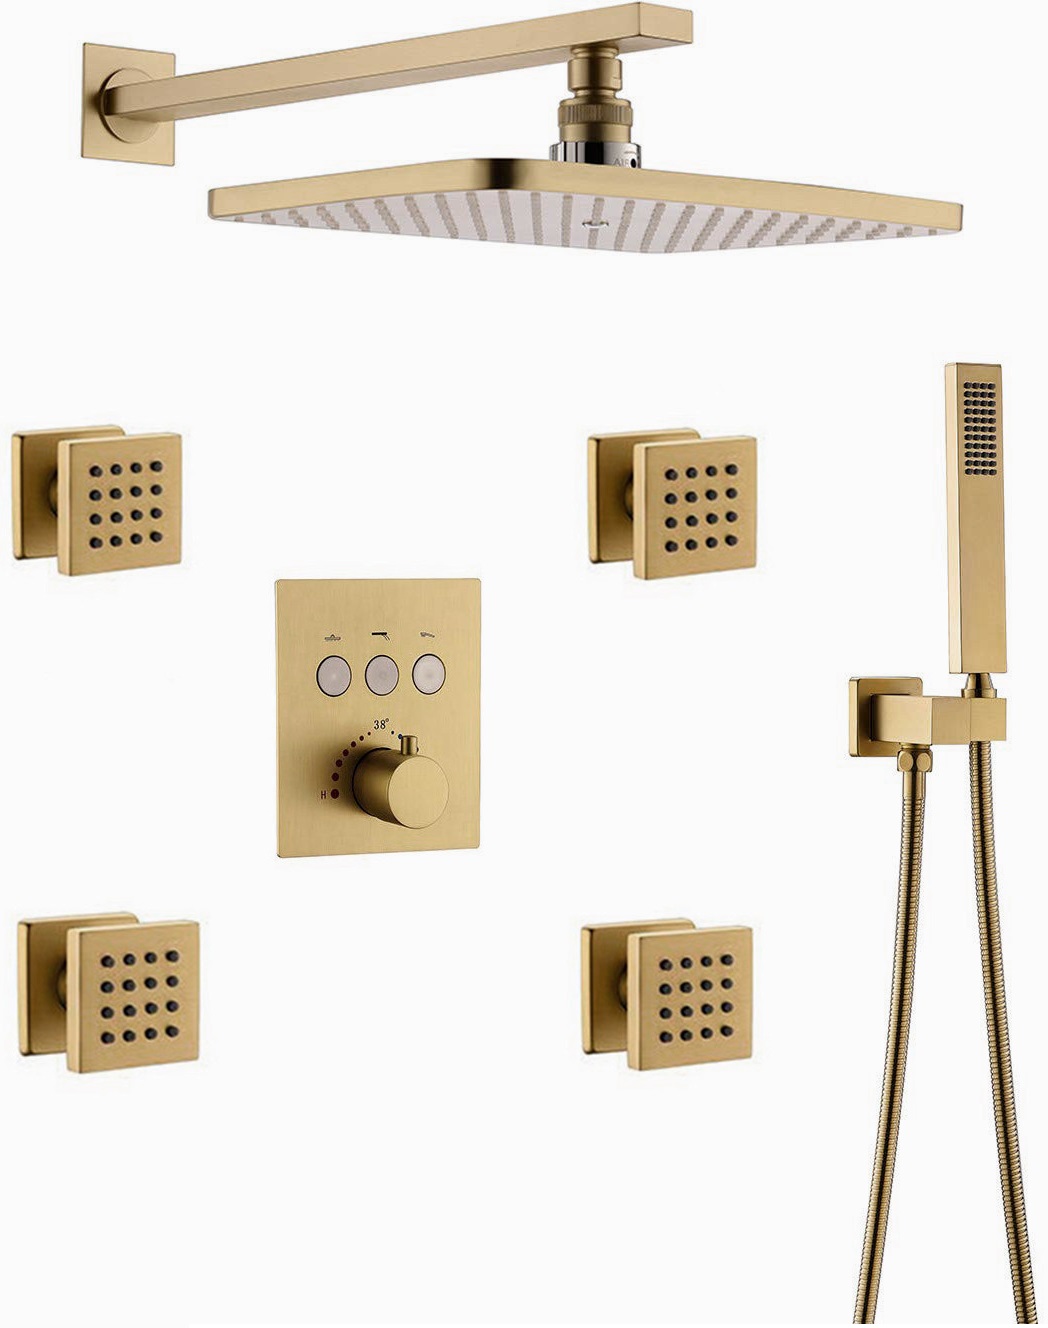 Fontana Creteil Brushed Gold Bathroom Thermostatic Button Shower System Set with Slide Bar